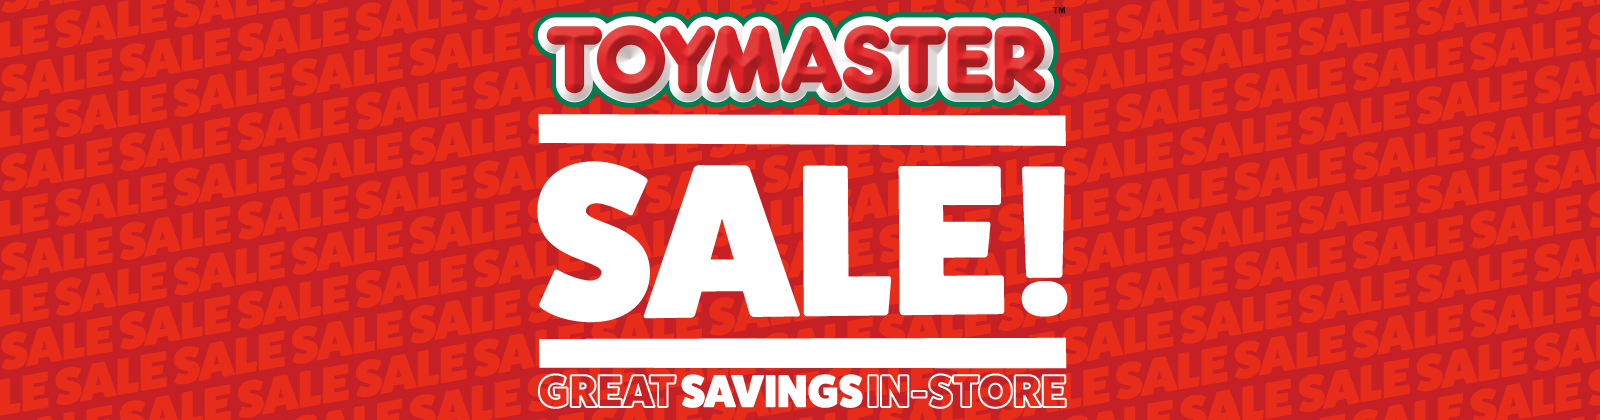 Banba Toymaster - Shopkins Season 2 is now in stock! Check